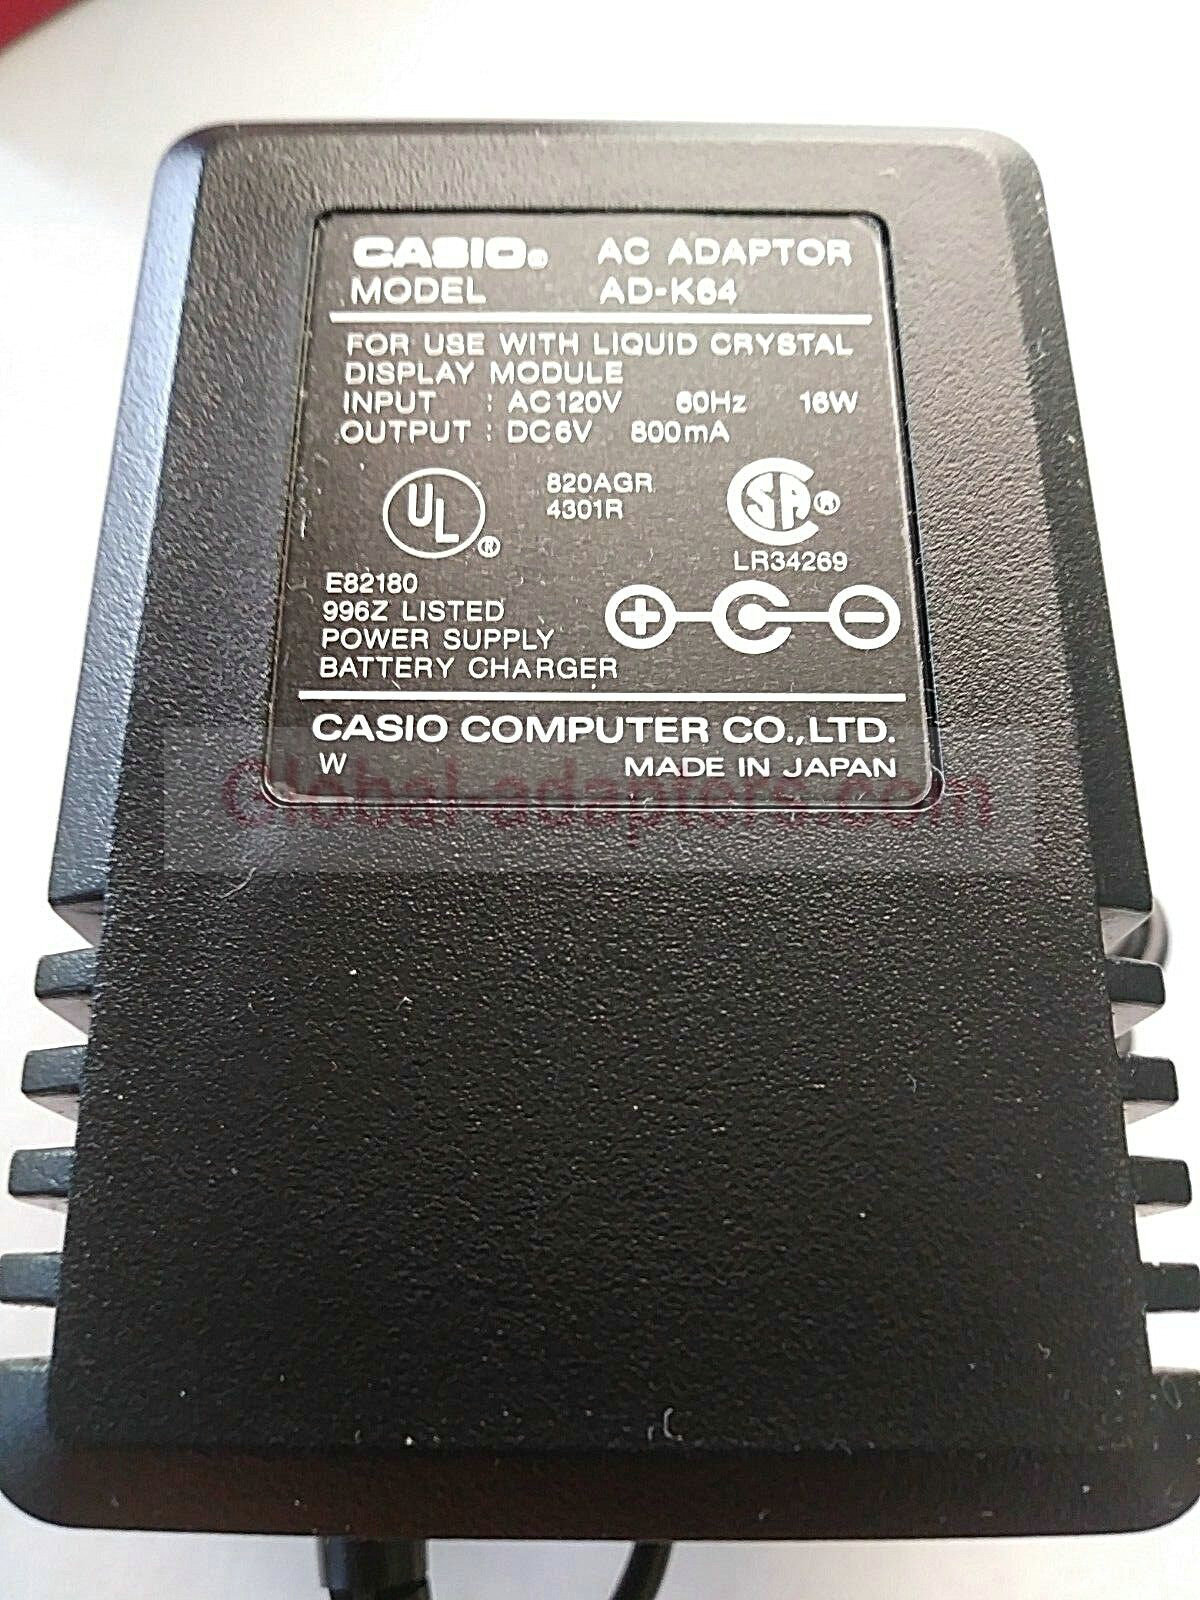 New 6V 800mA Casio AD-K64 Power Supply Ac Adapter